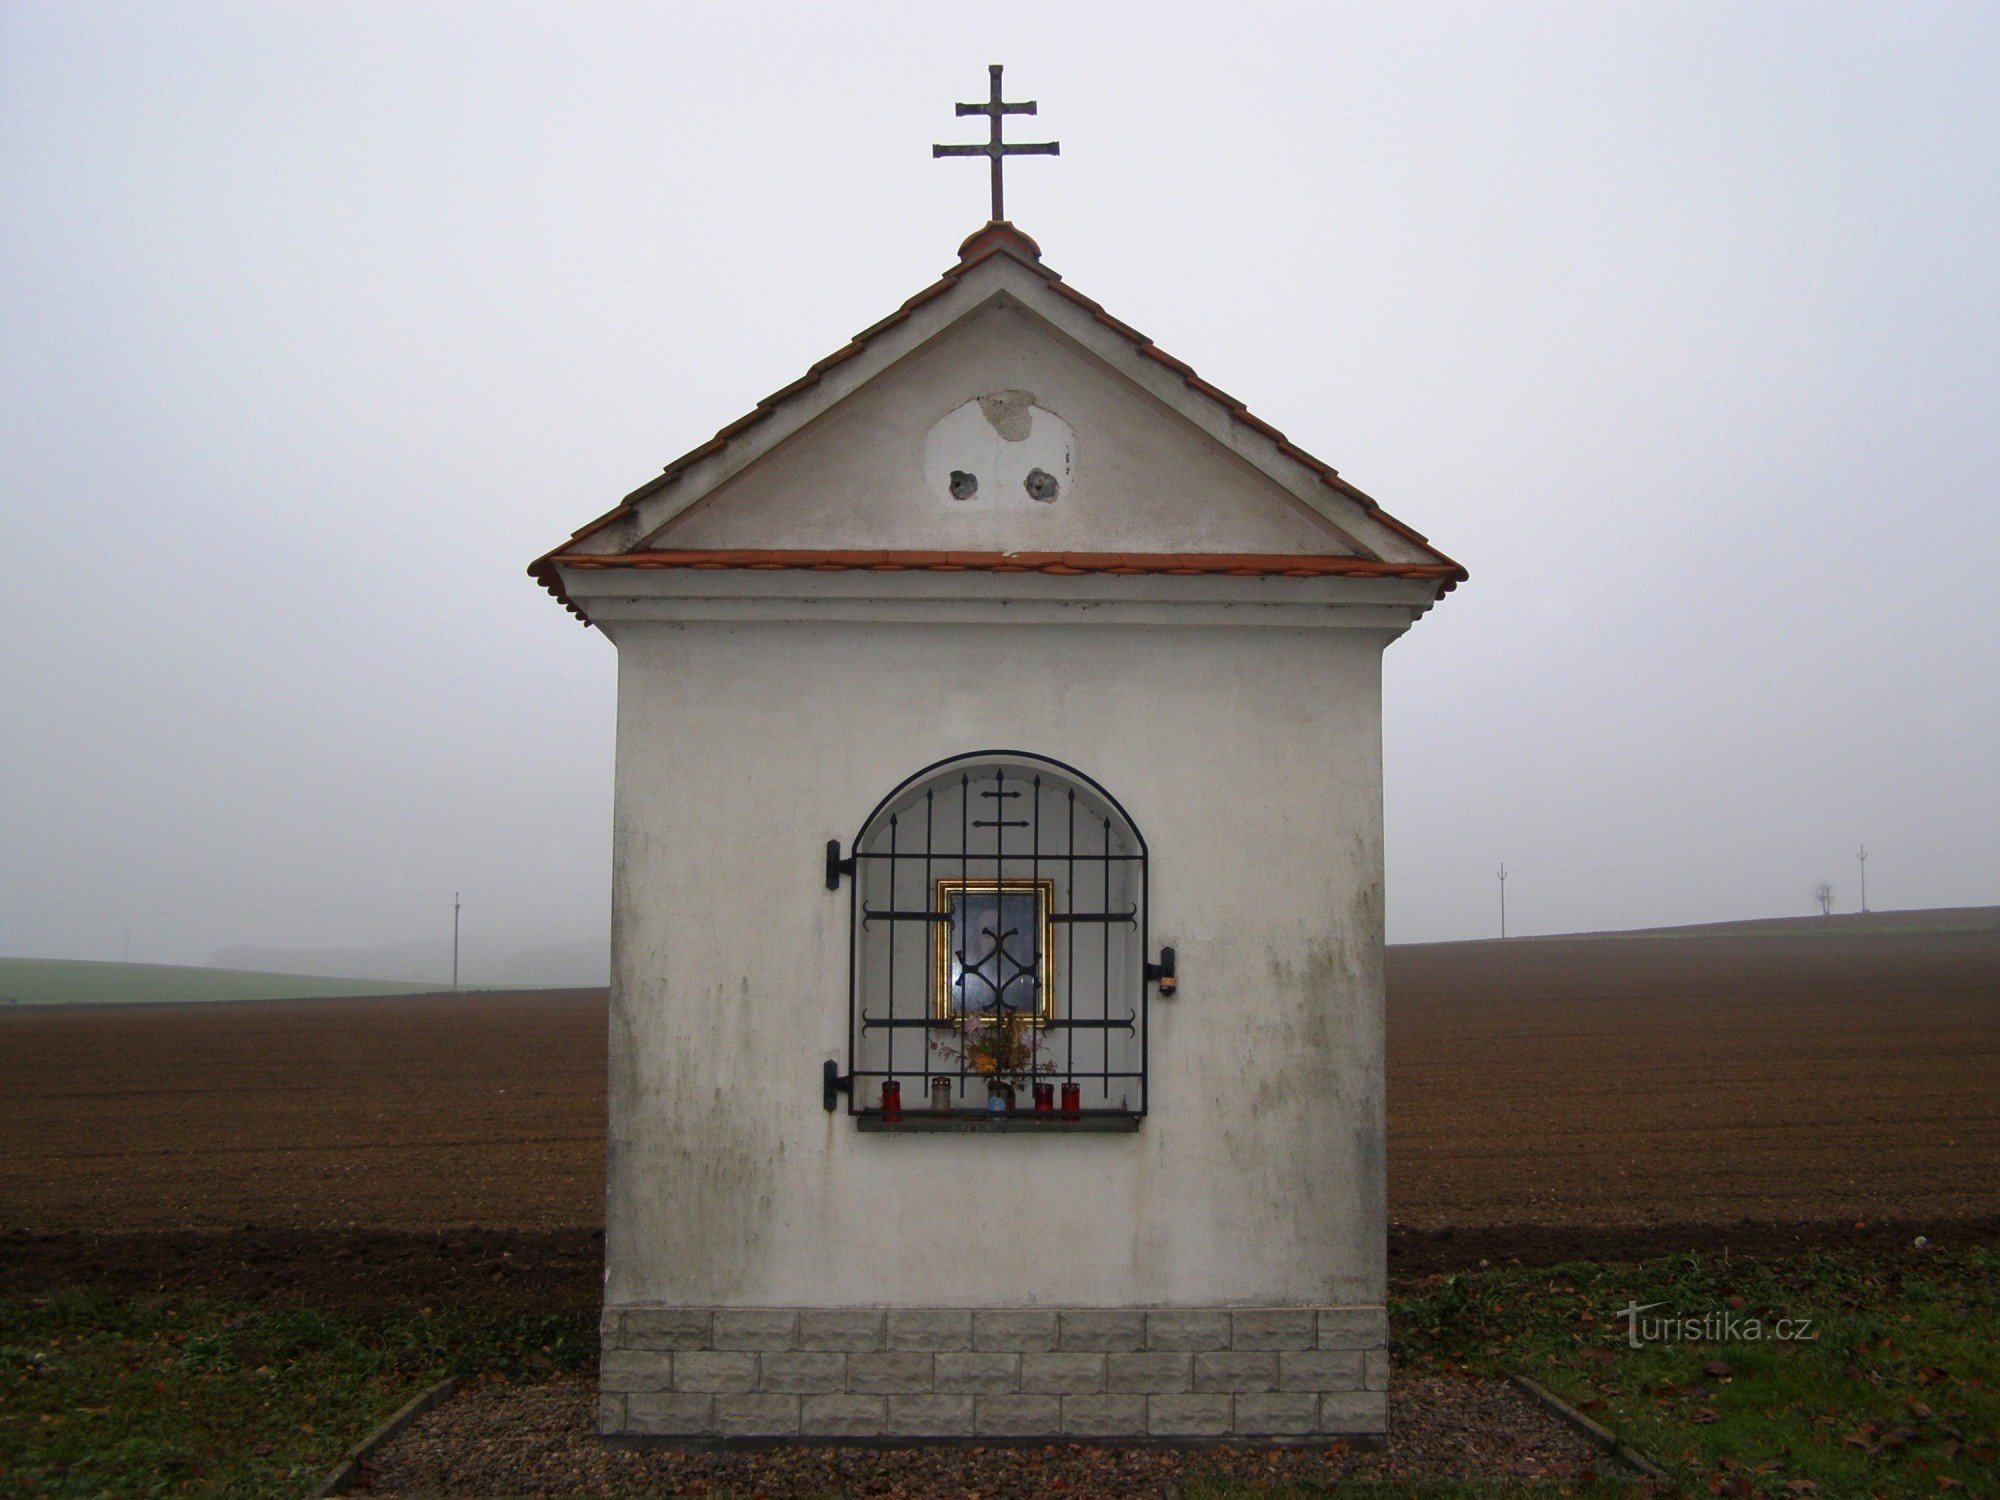 Chapel of St. Salvatore near Hamburg